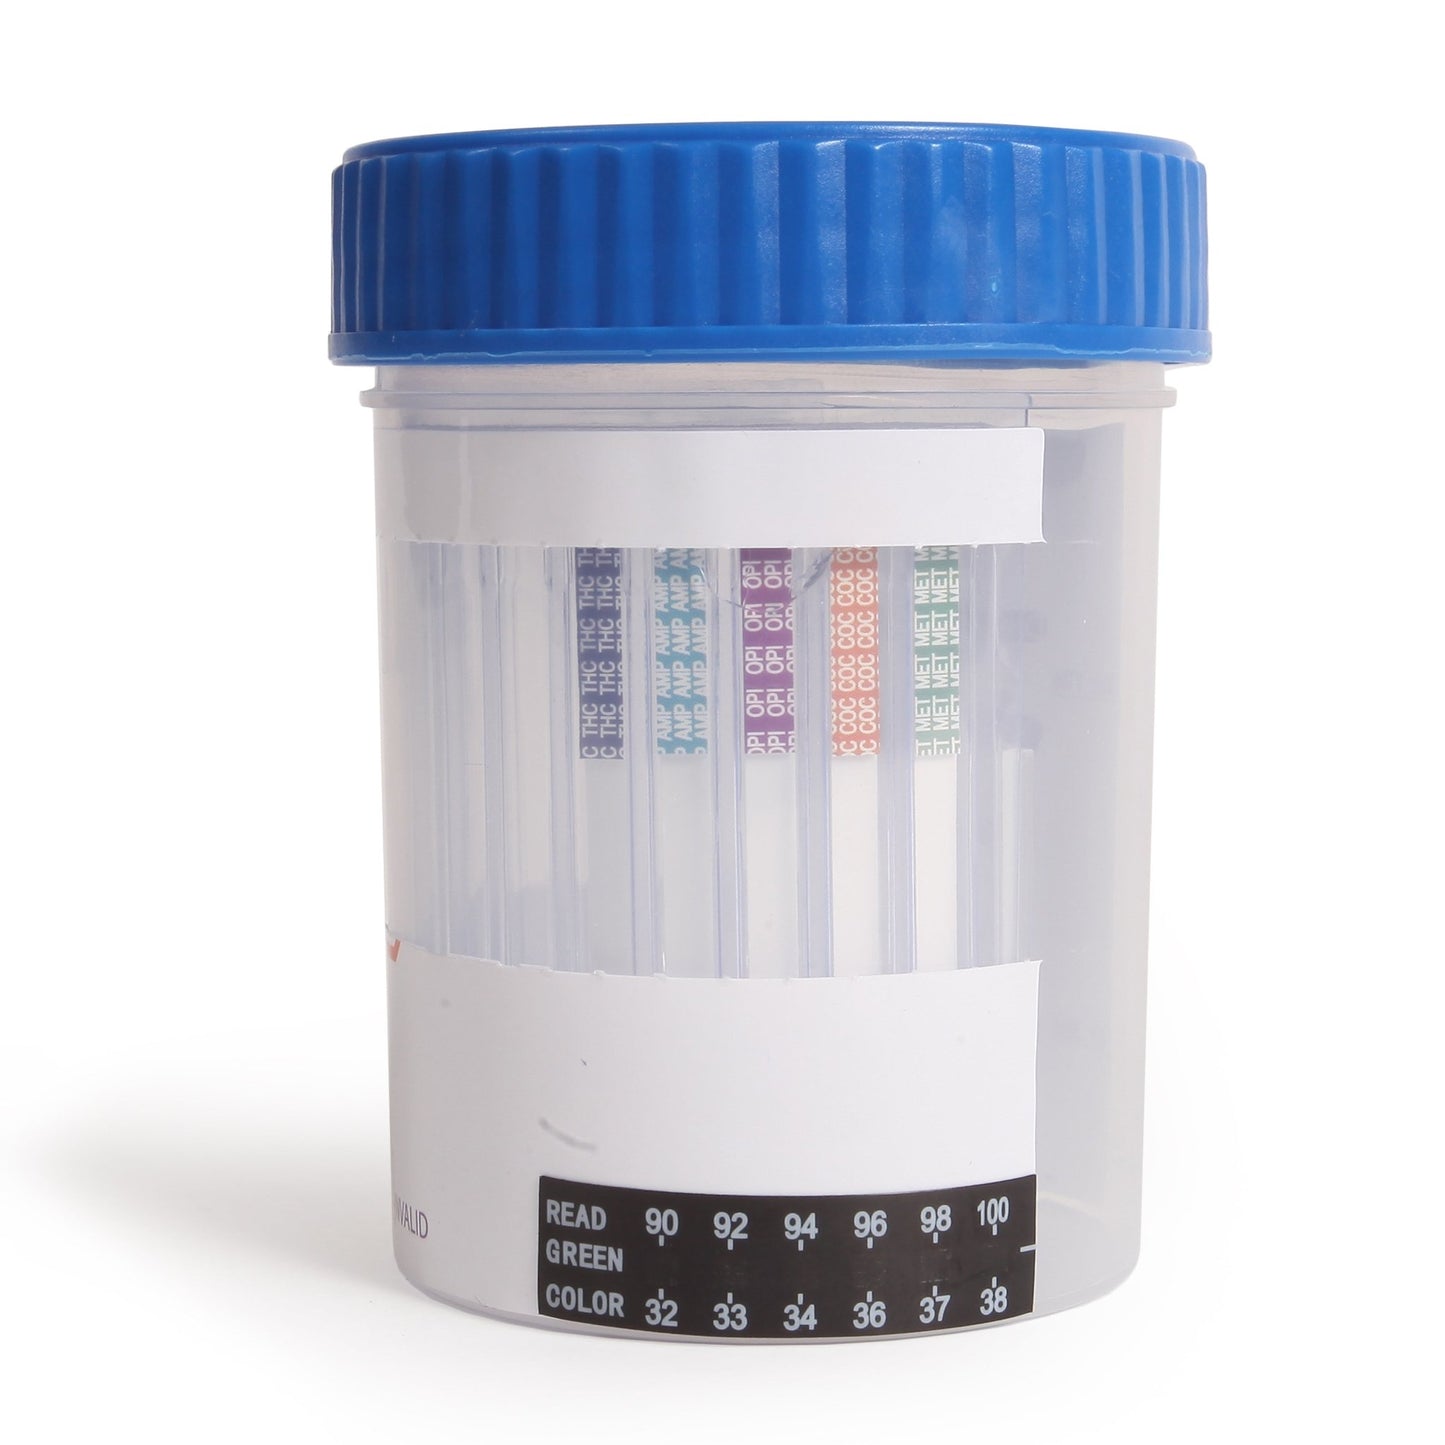 Healgen 6 Panel Drug Cup Tests - Verséa Diagnostics